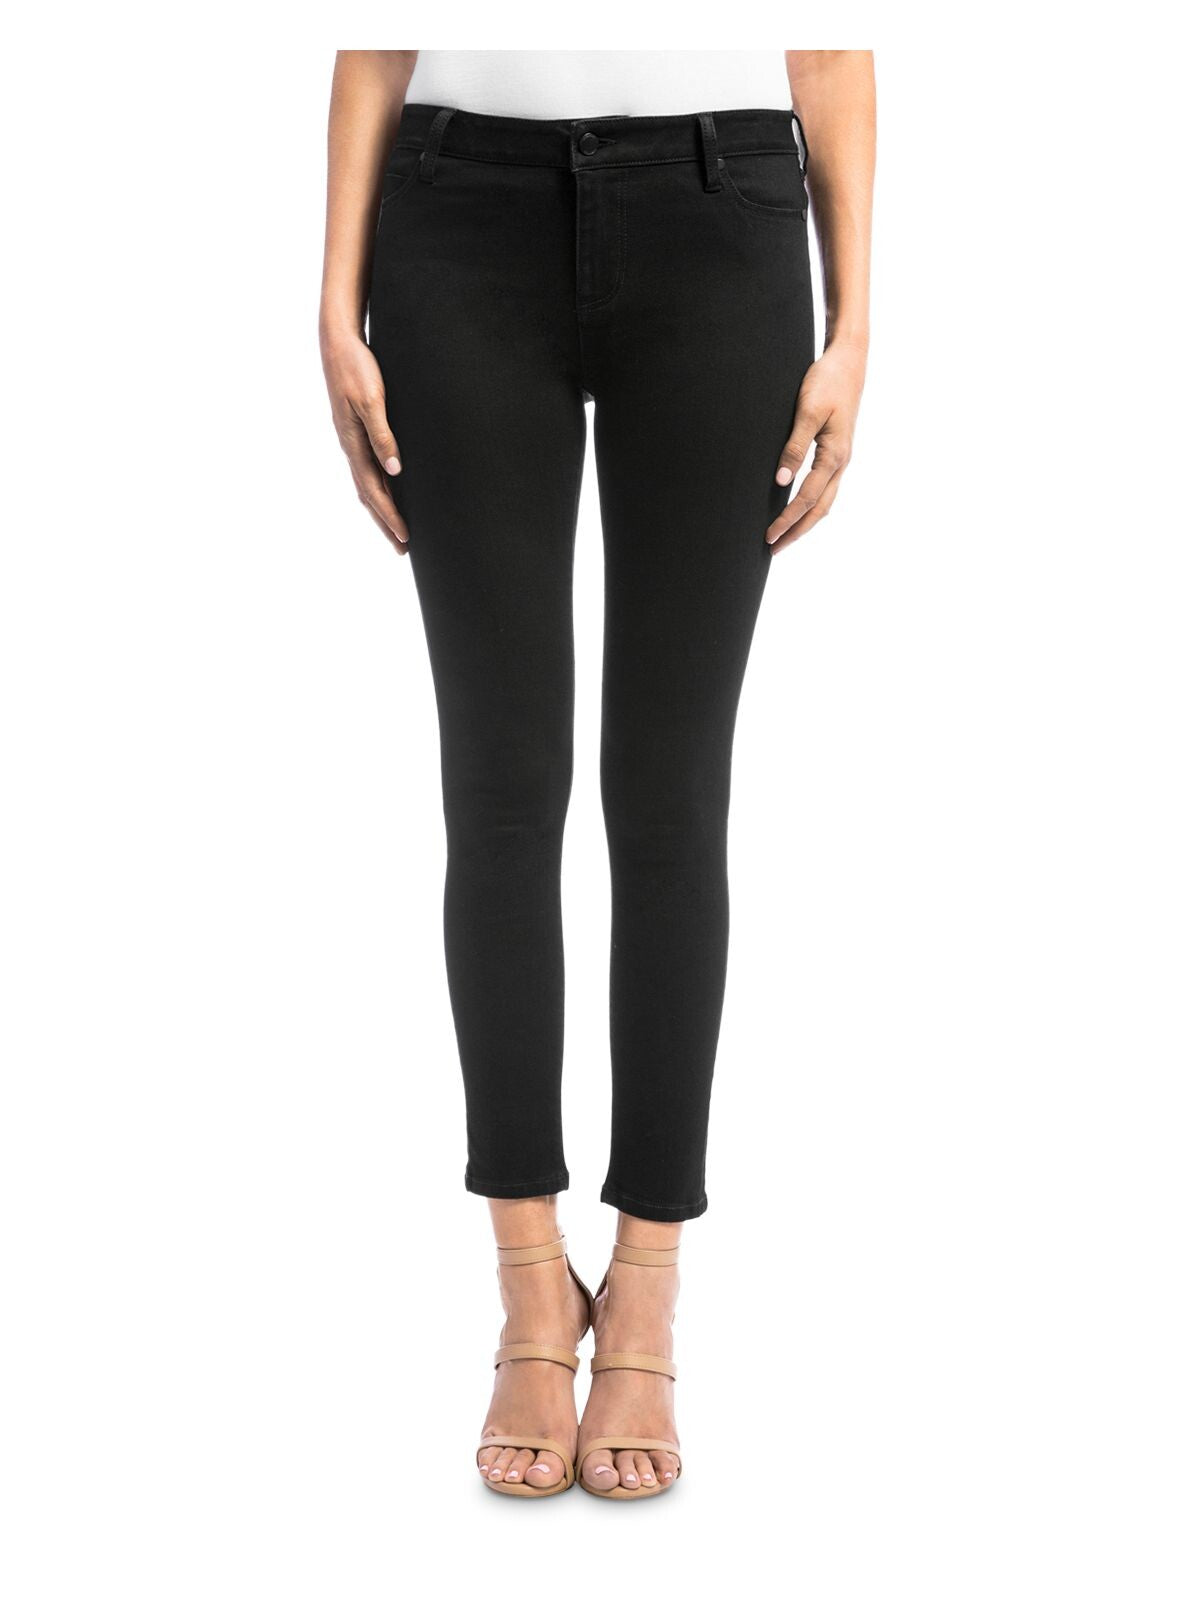 LIVERPOOL Womens Black Skinny Jeans 4\27